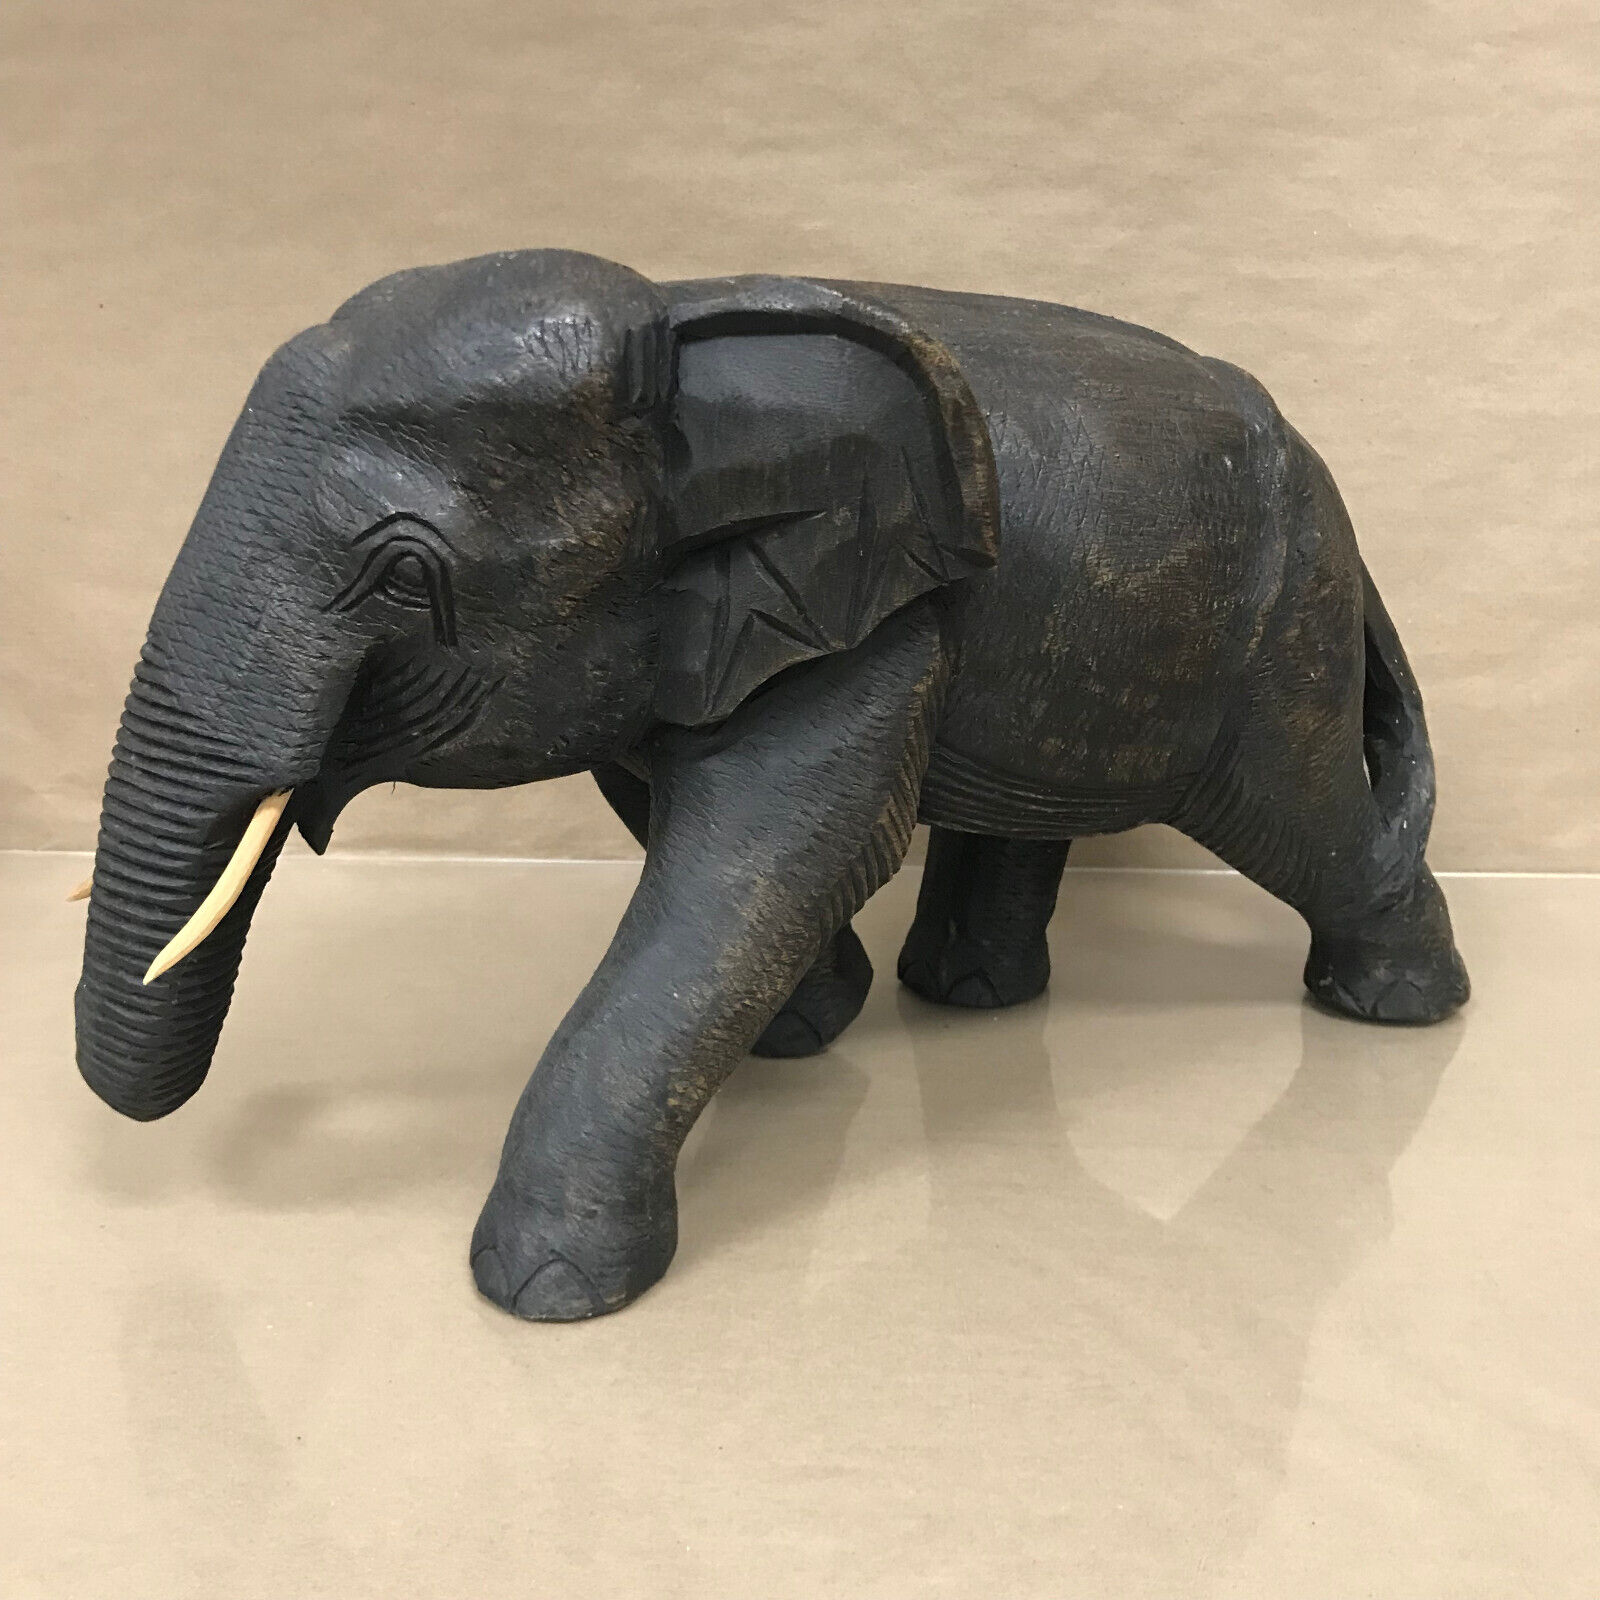 Vintage Primitive Decor Hand Carved Wooden Elephant Sculpture Carving 20x11x7